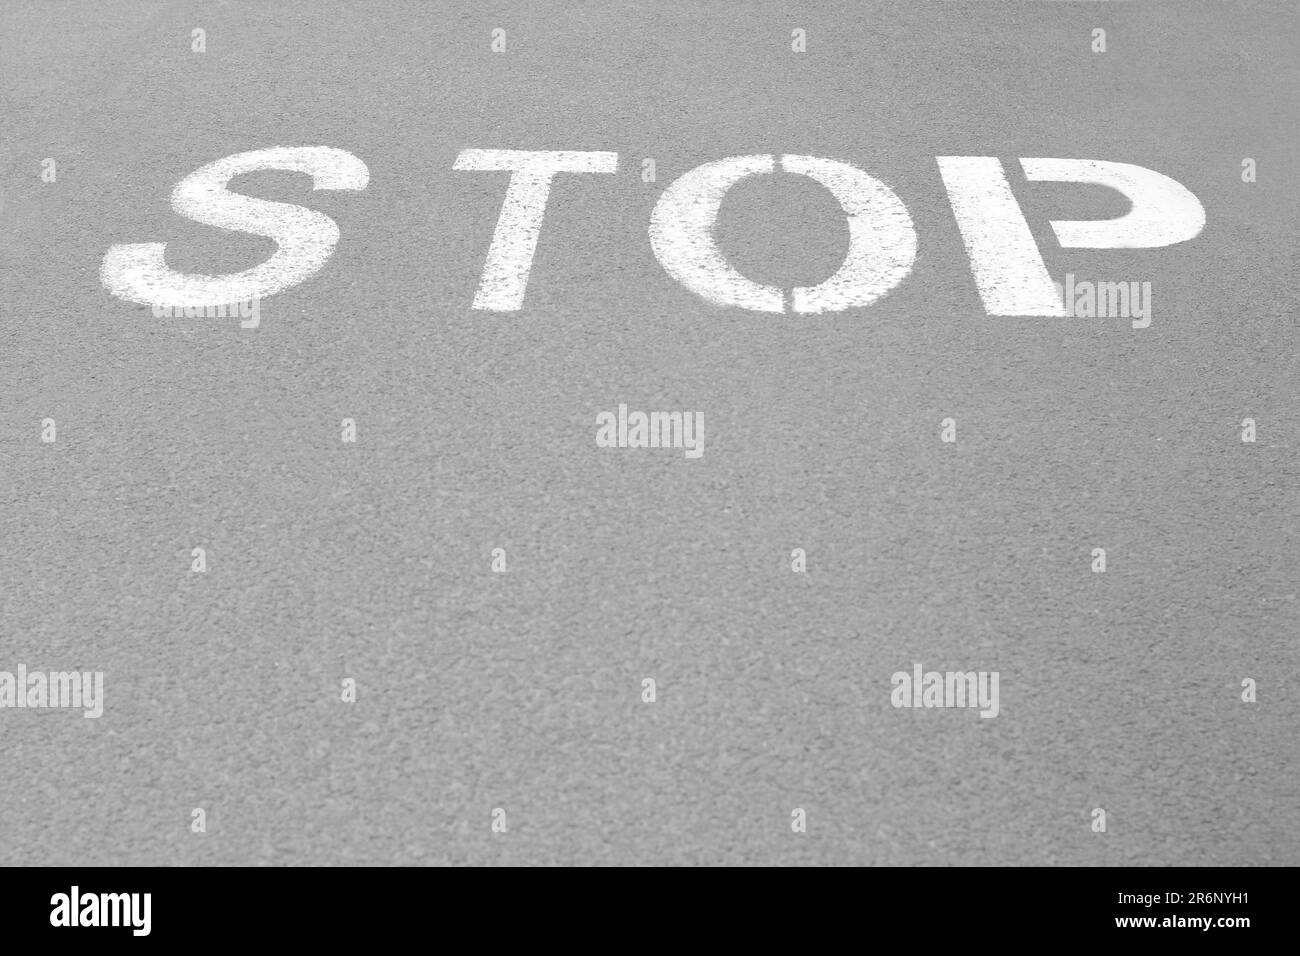 White sign Stop written on asphalt road in city Stock Photo